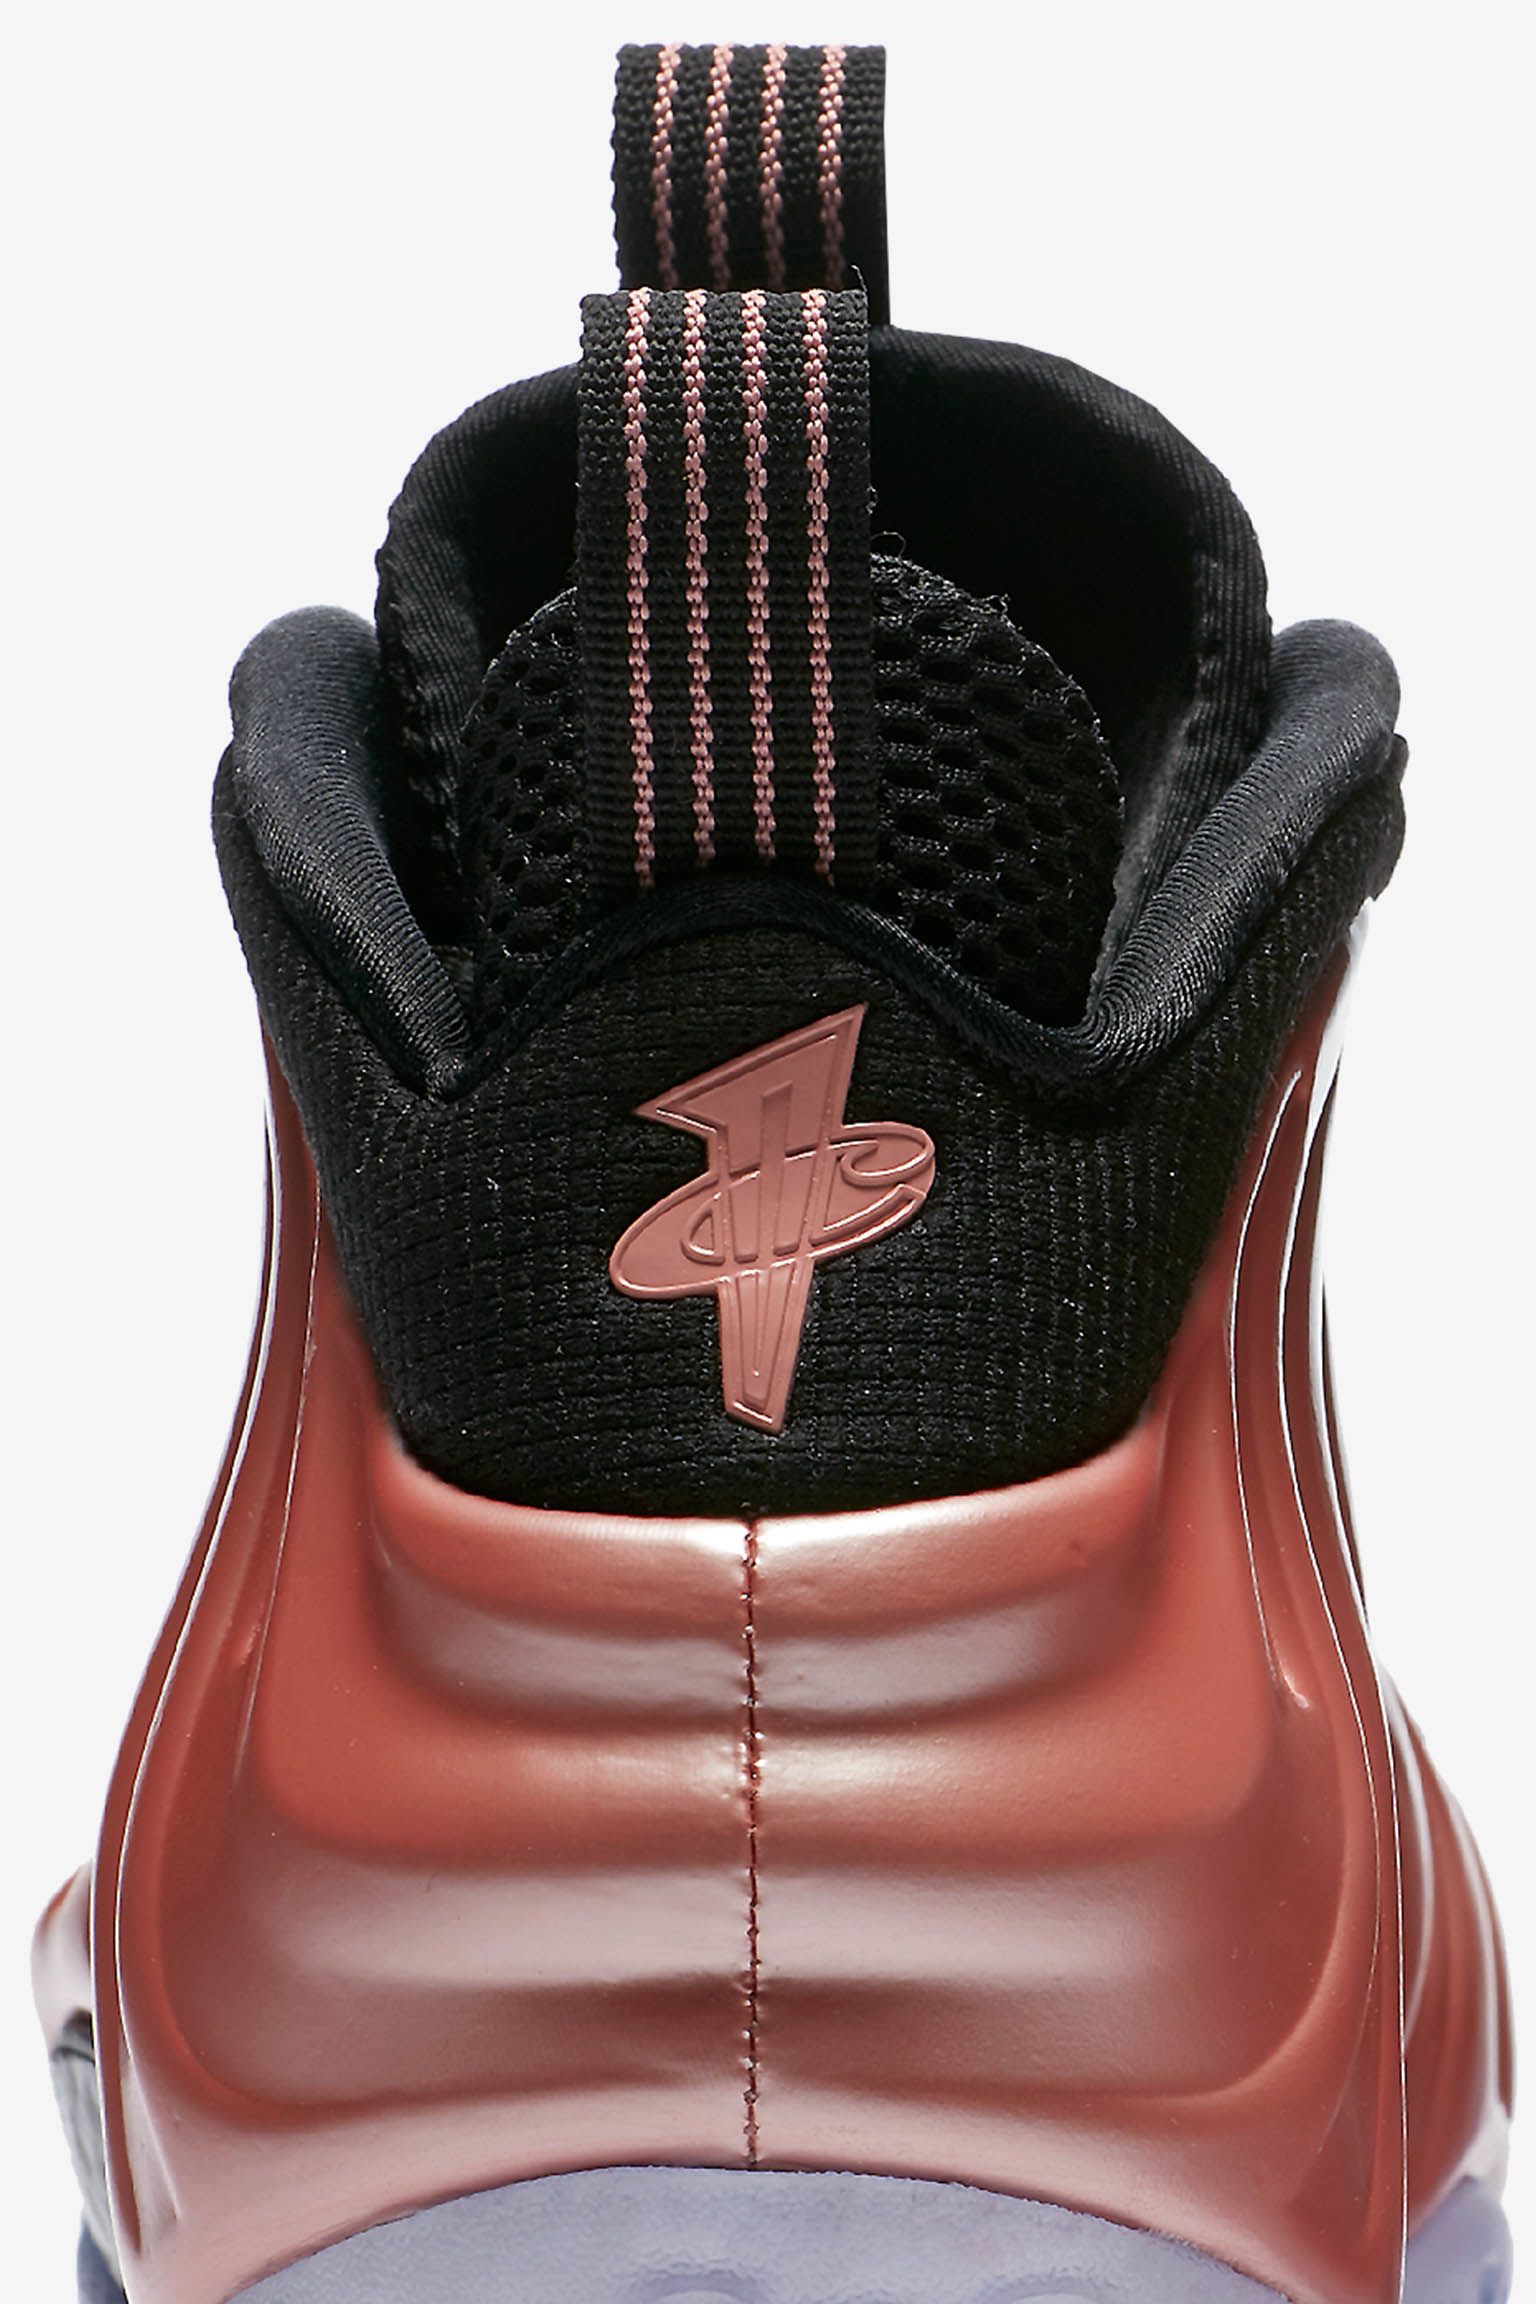 Nike Air Foamposite One Rust Pink